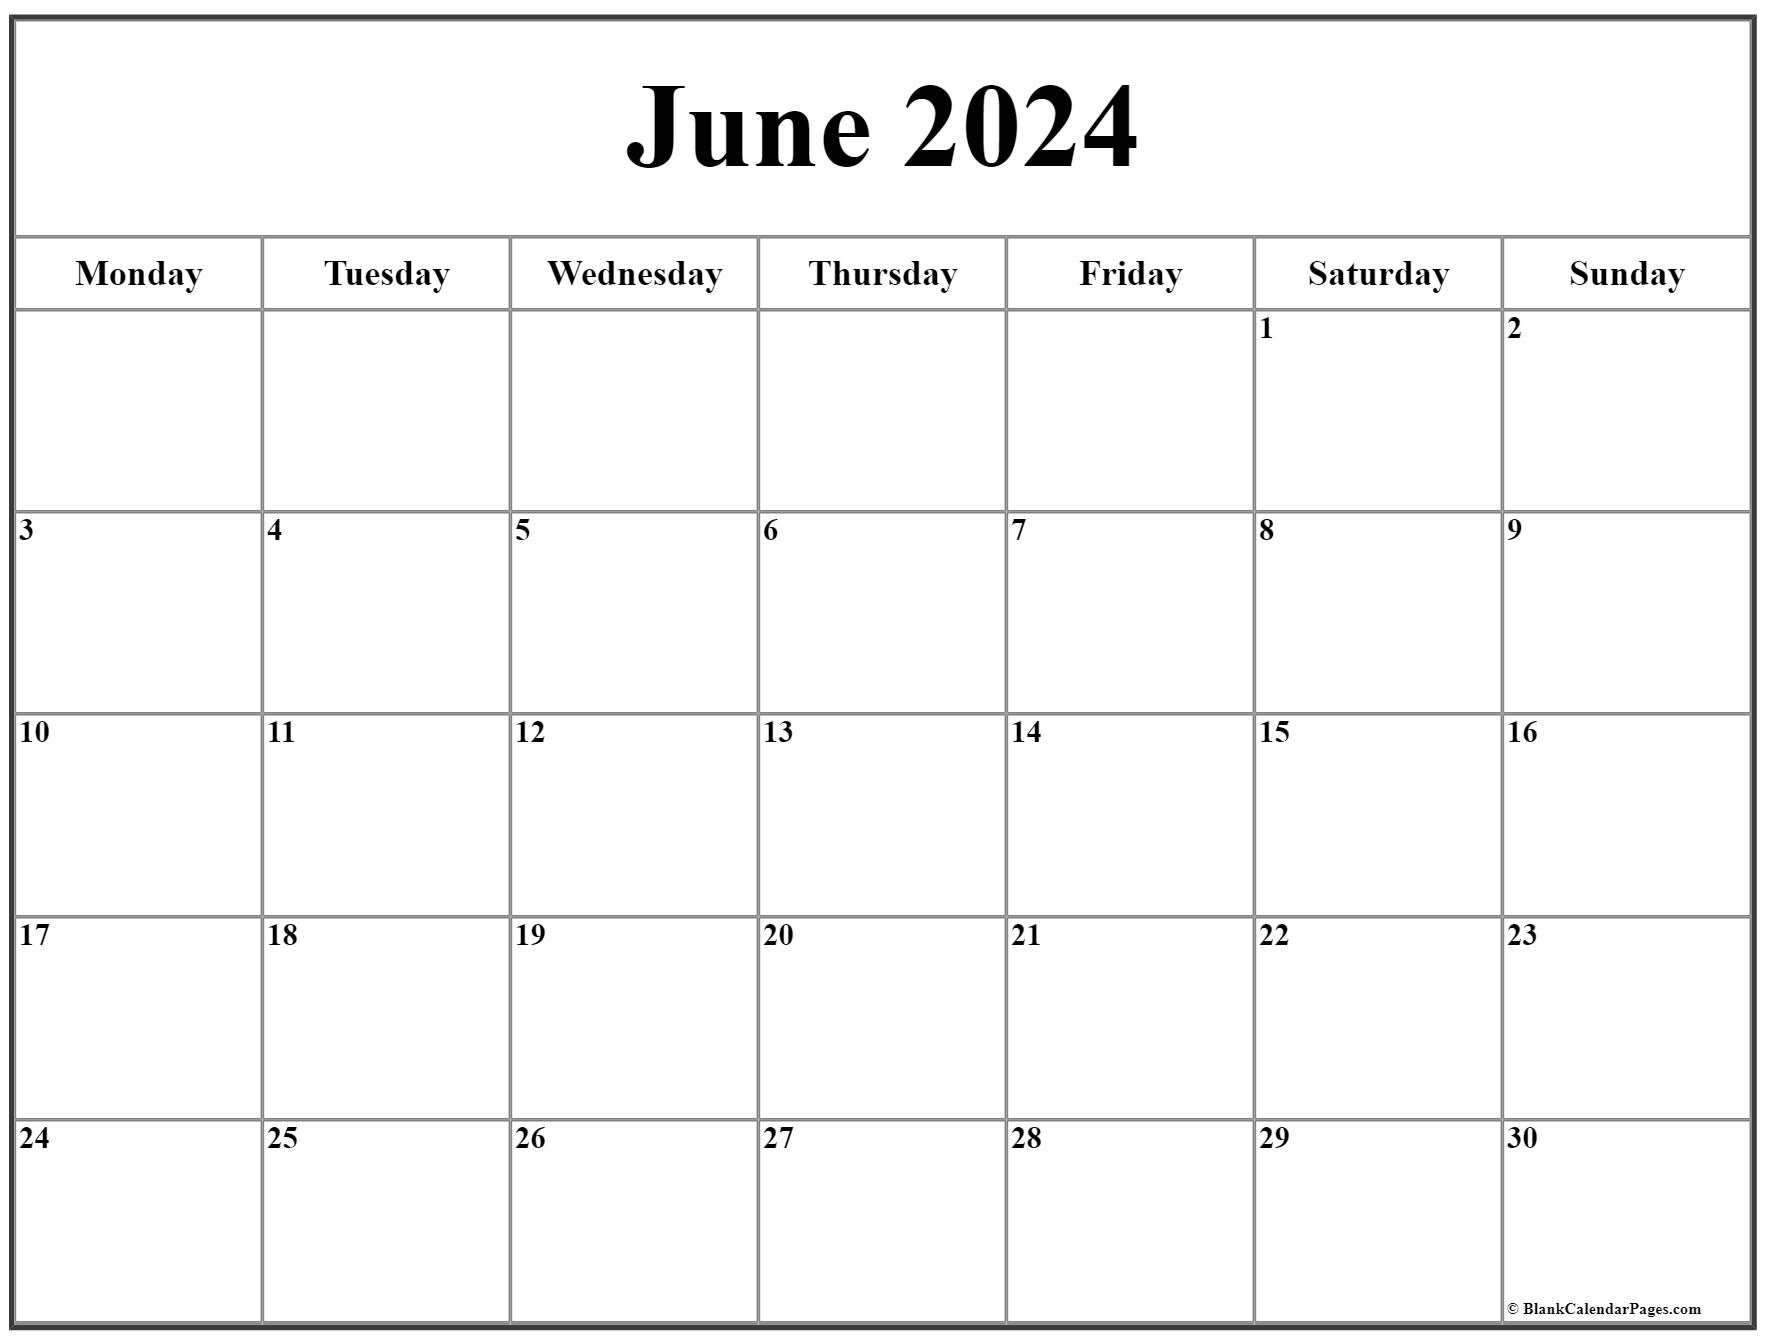 June 2024 Monday Calendar | Monday To Sunday for June 2024 Blank Printable Calendar